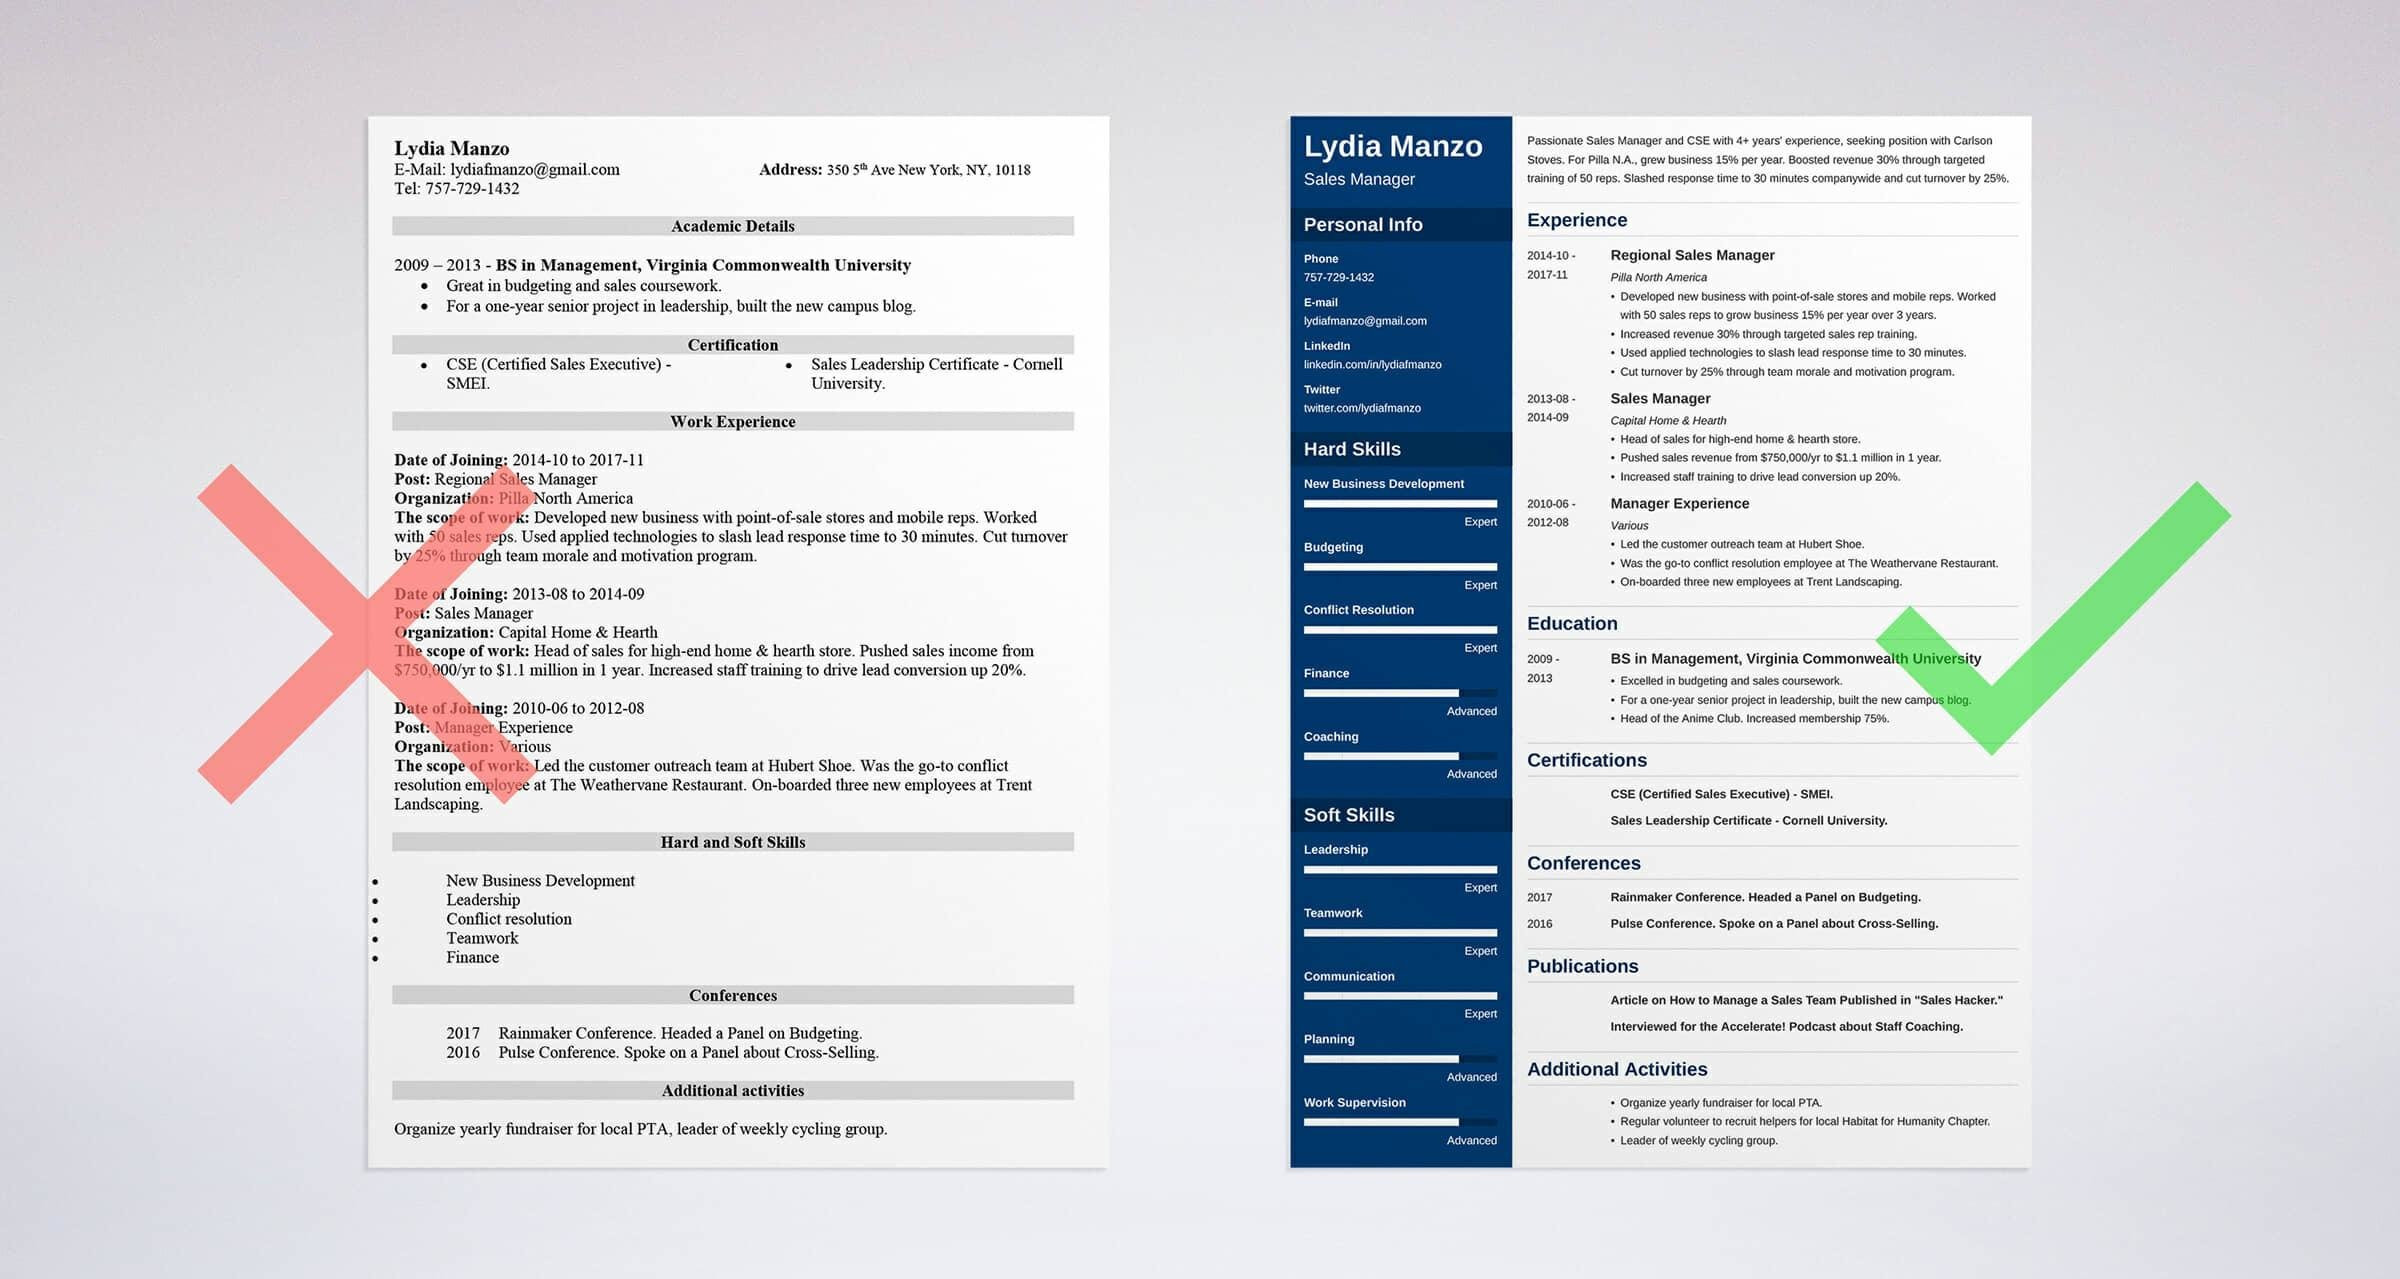 Sample Resume Descriptions for Managing Employees Manager Resume Examples [skills, Job Description]